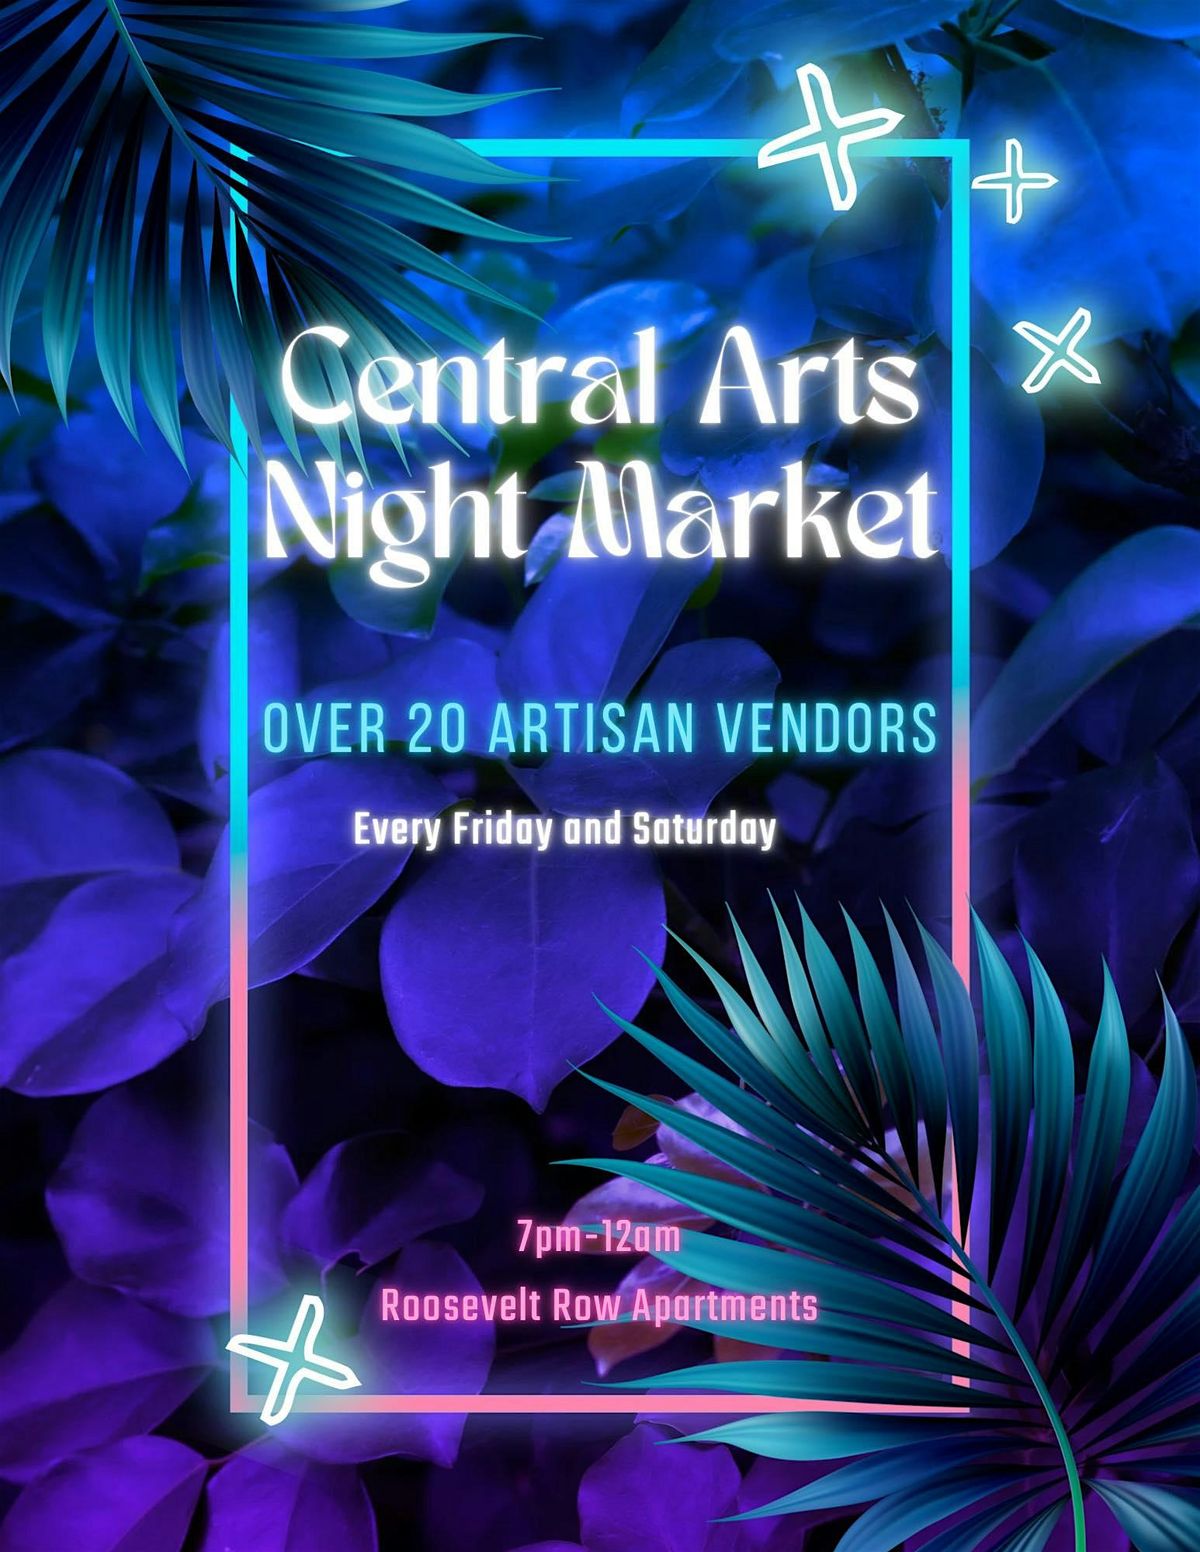 Central Arts Night Market on Roosevelt Row